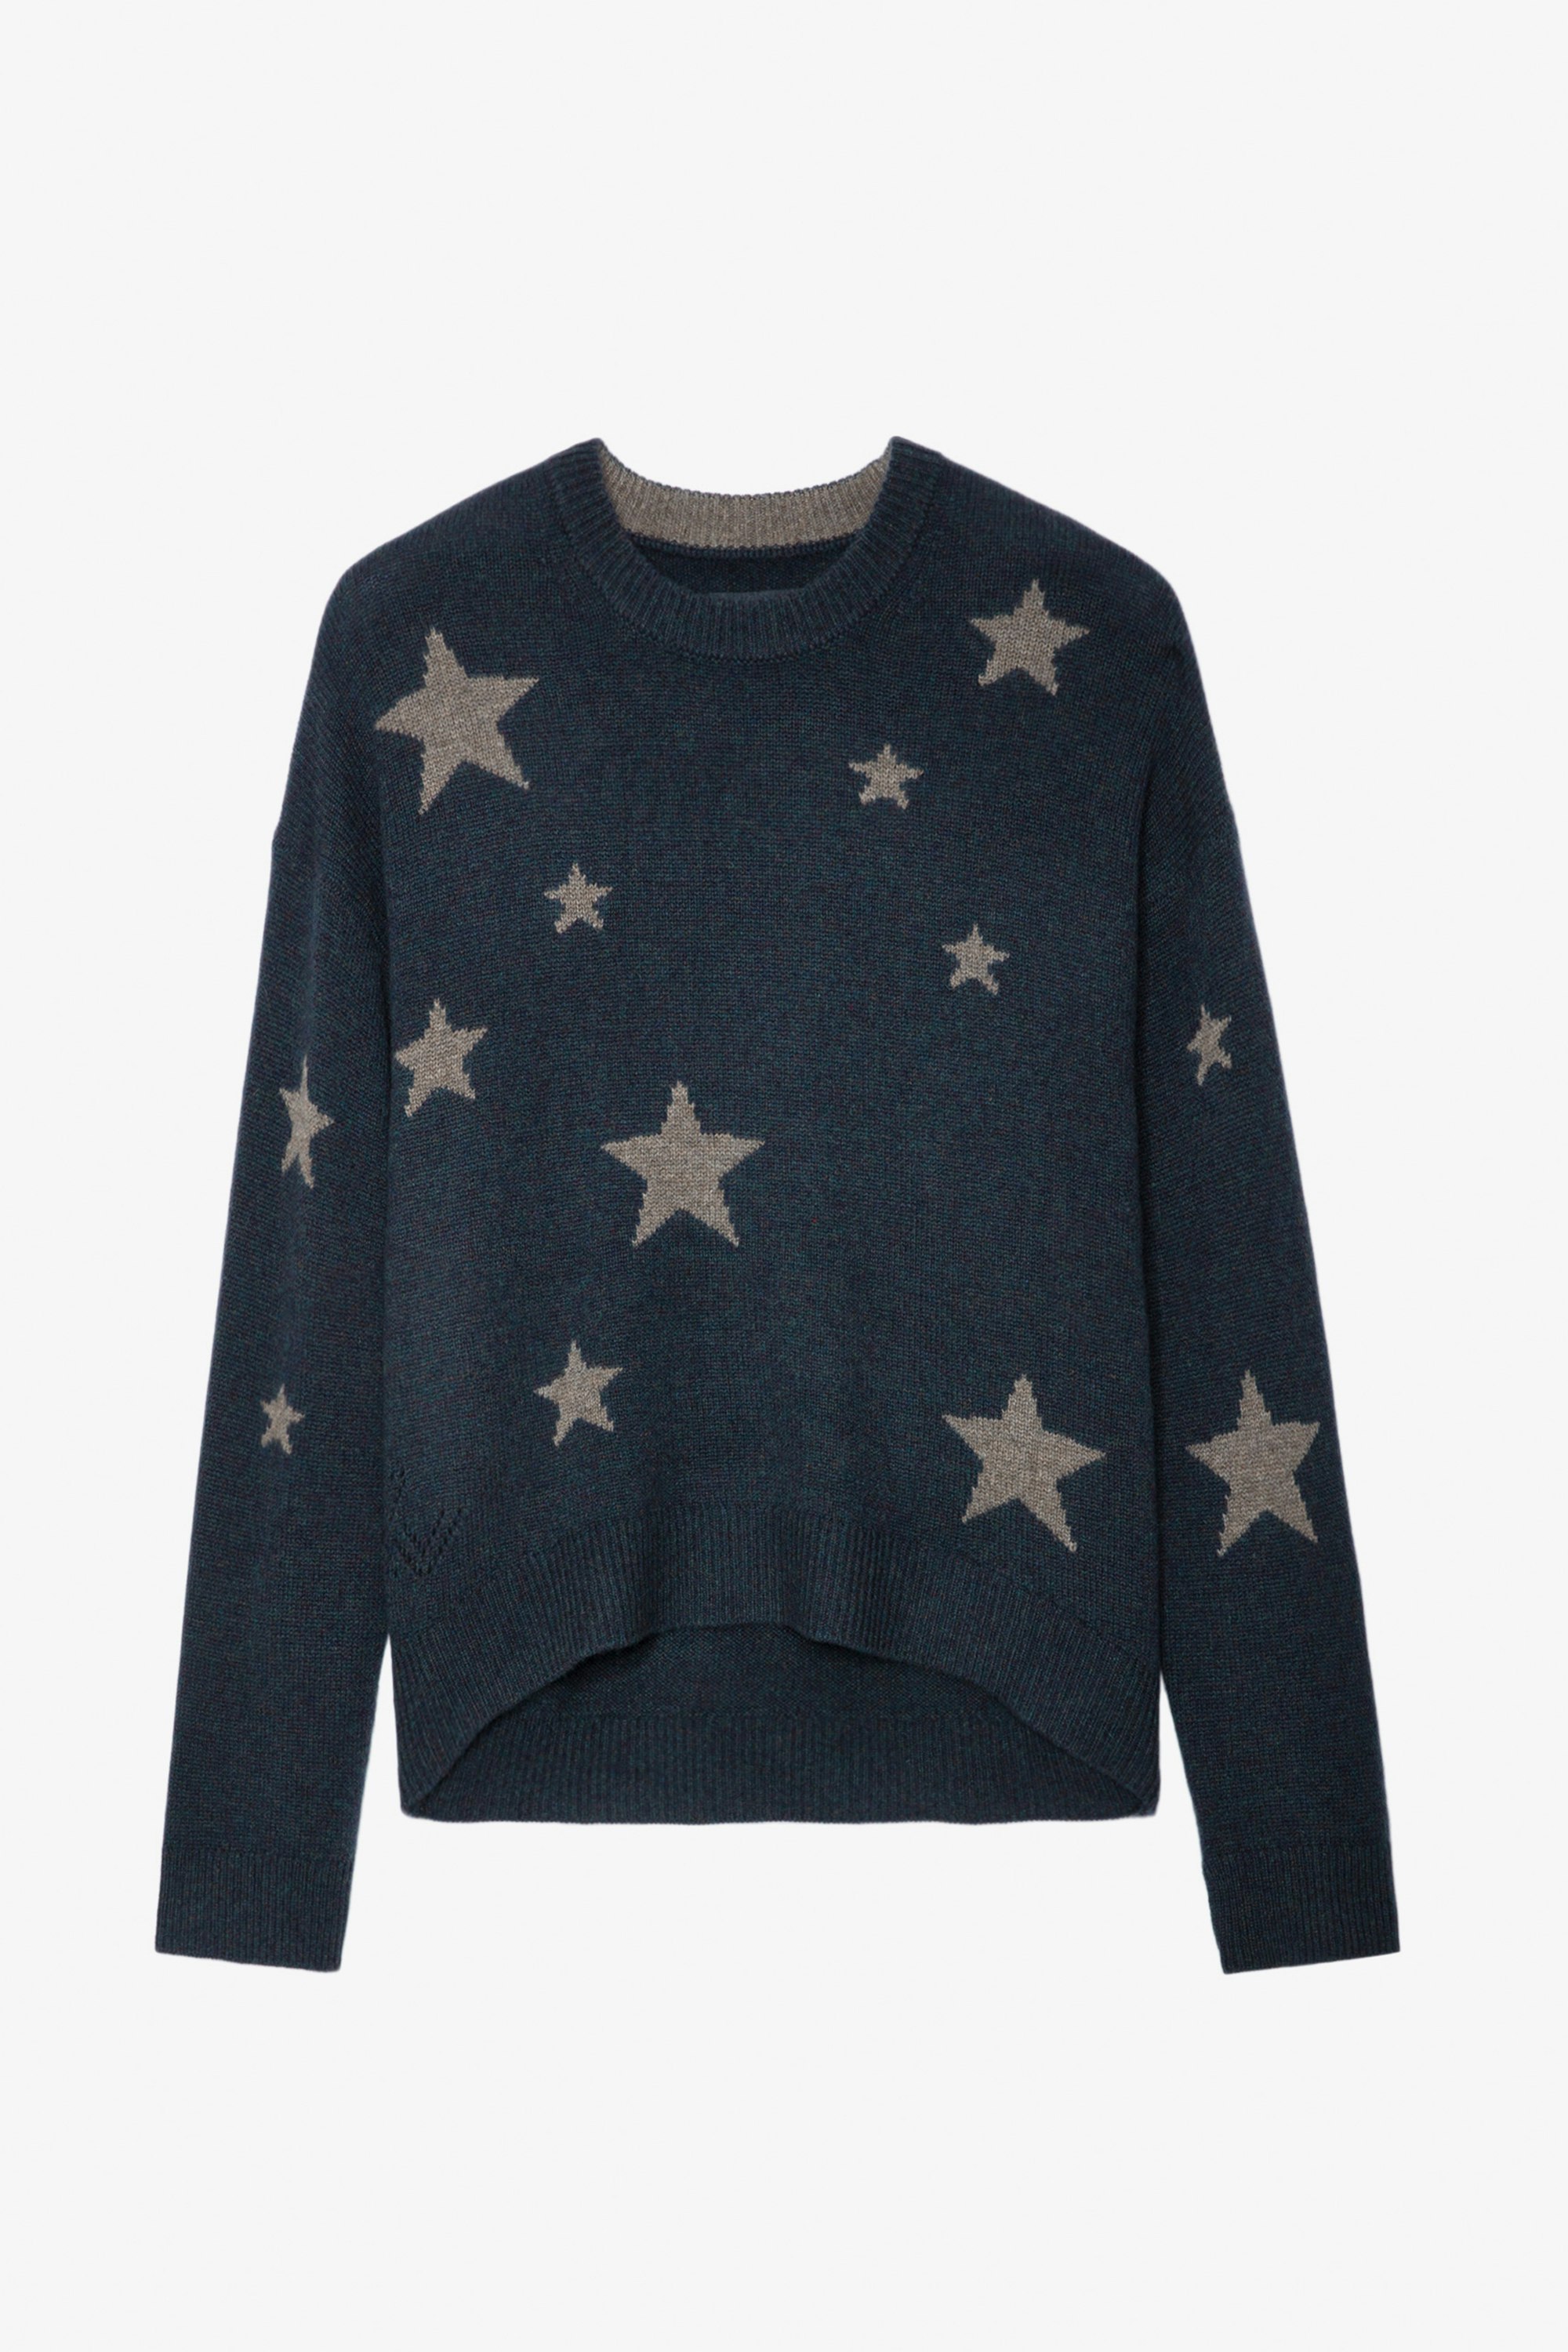 Markus Cashmere Sweater  - Women’s dark green cashmere sweater with star-shaped motifs.